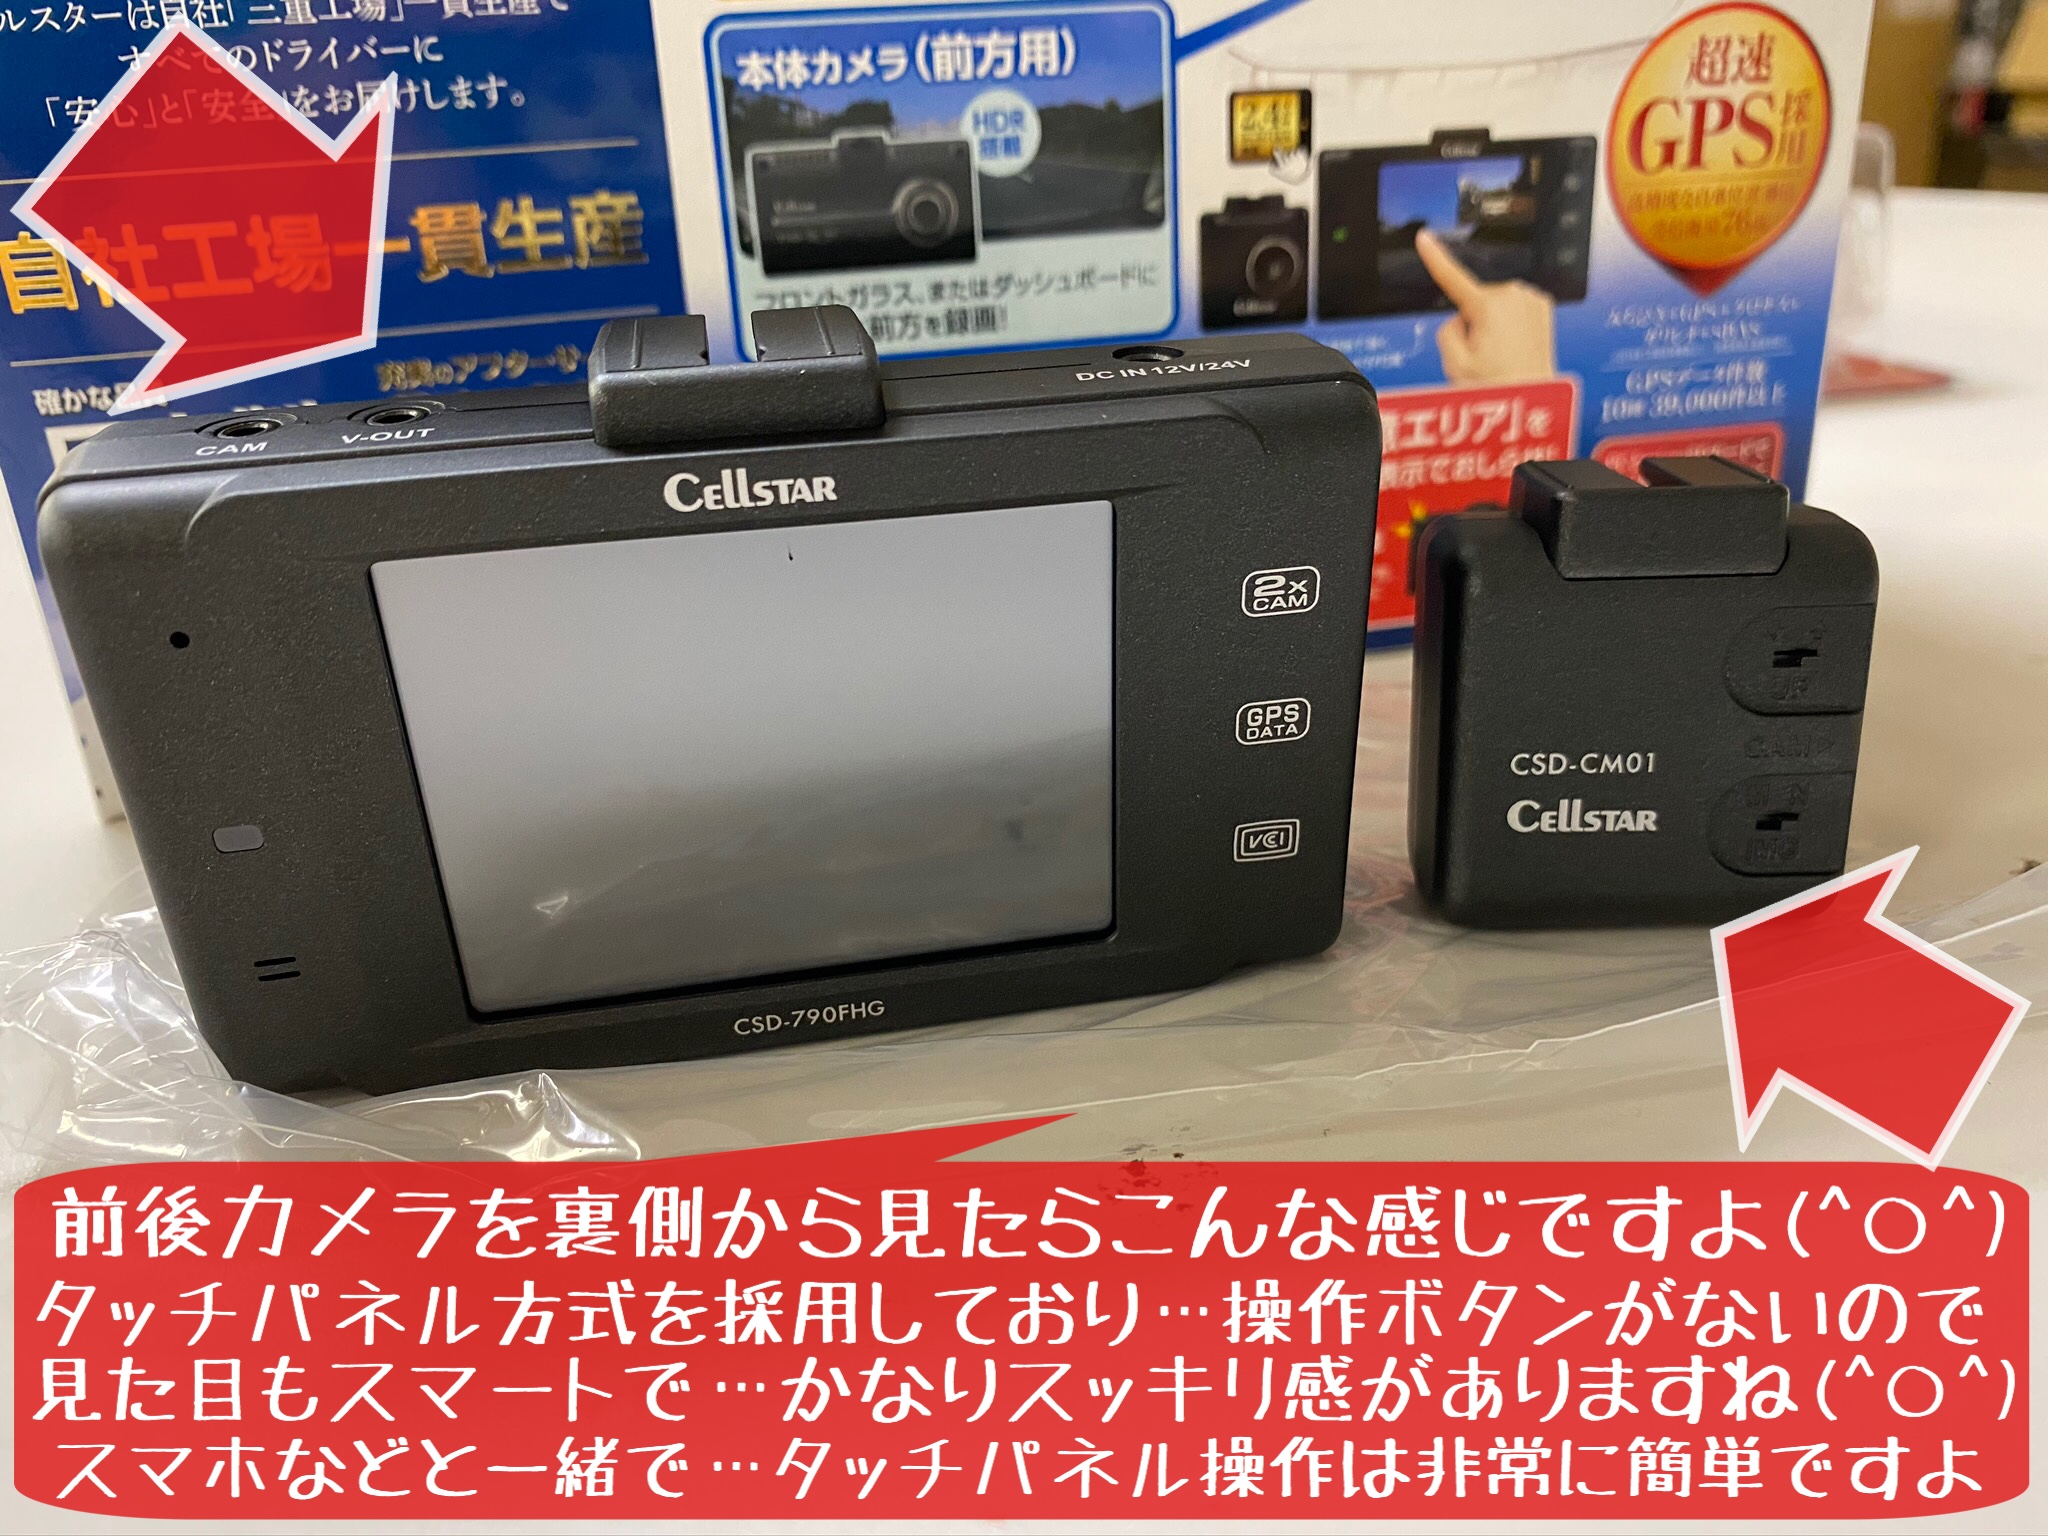 CSD-790FHG セルスター ドライブレコーダー - blog.knak.jp